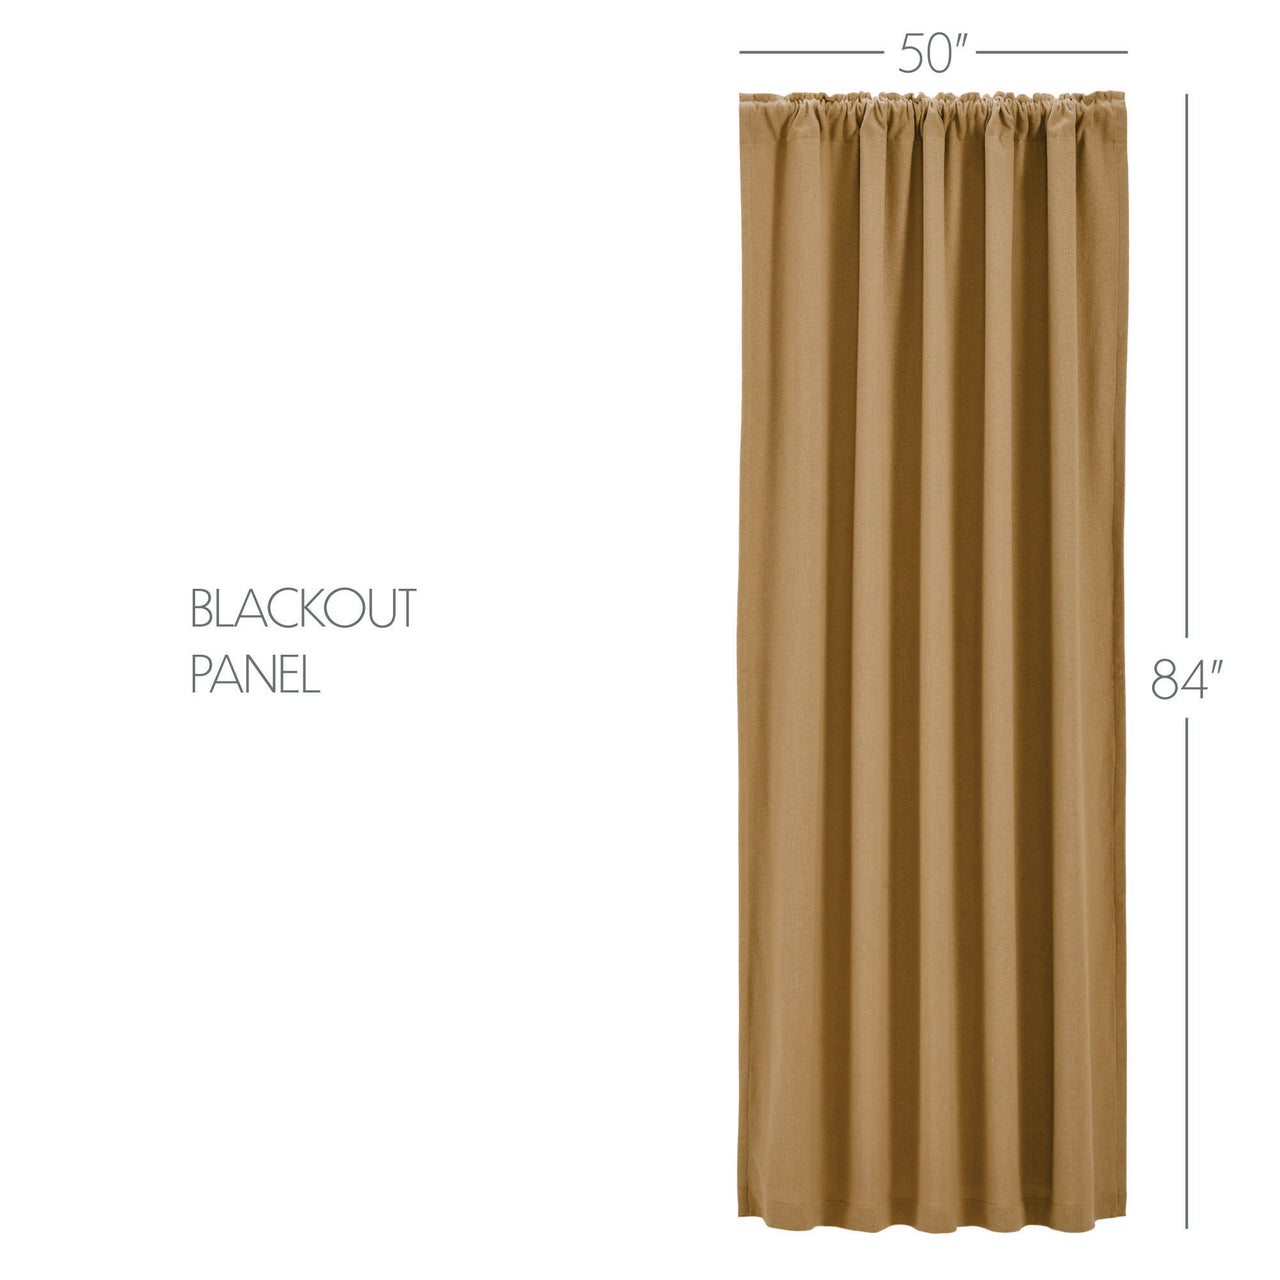 Burlap Natural Blackout Panel Curtain 84x50 VHC Brands